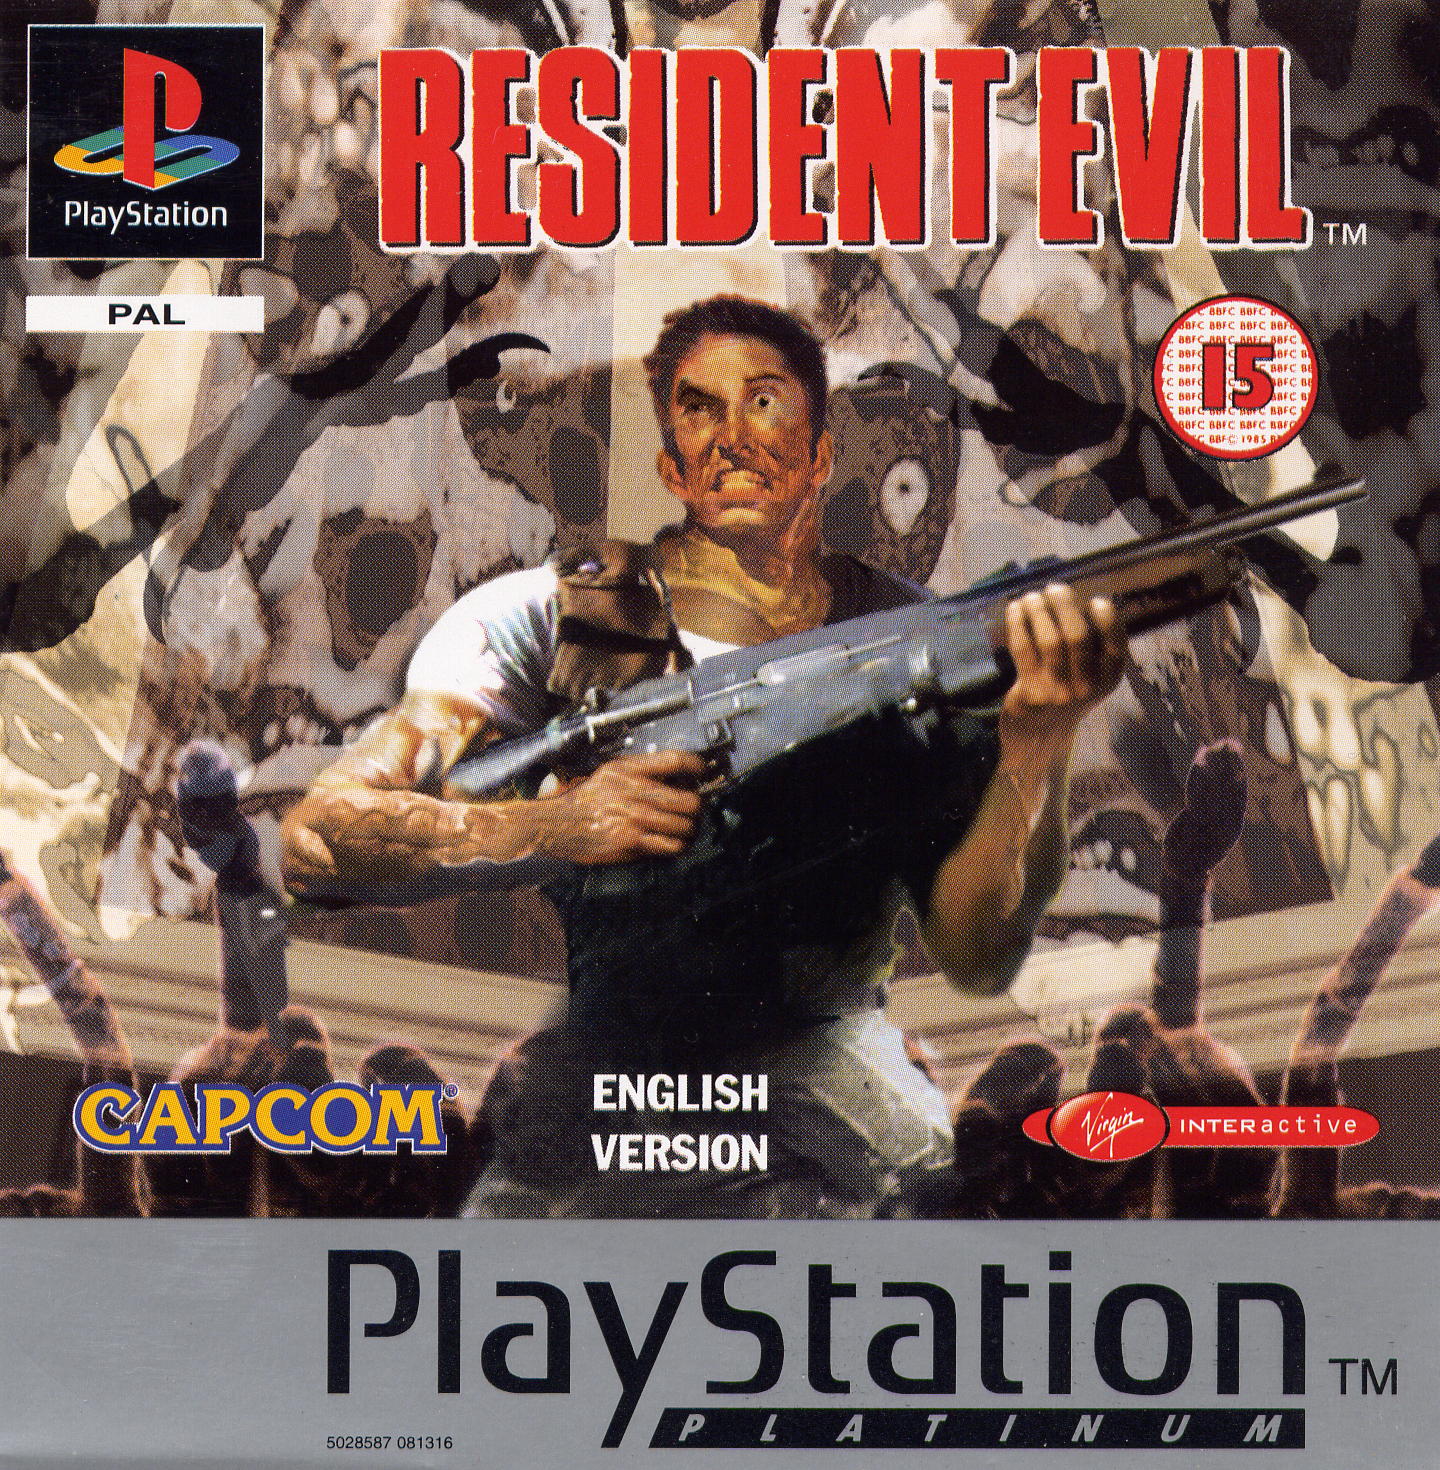 Imagen de la Portada del Resident Evil para PlayStation (1) en 1996